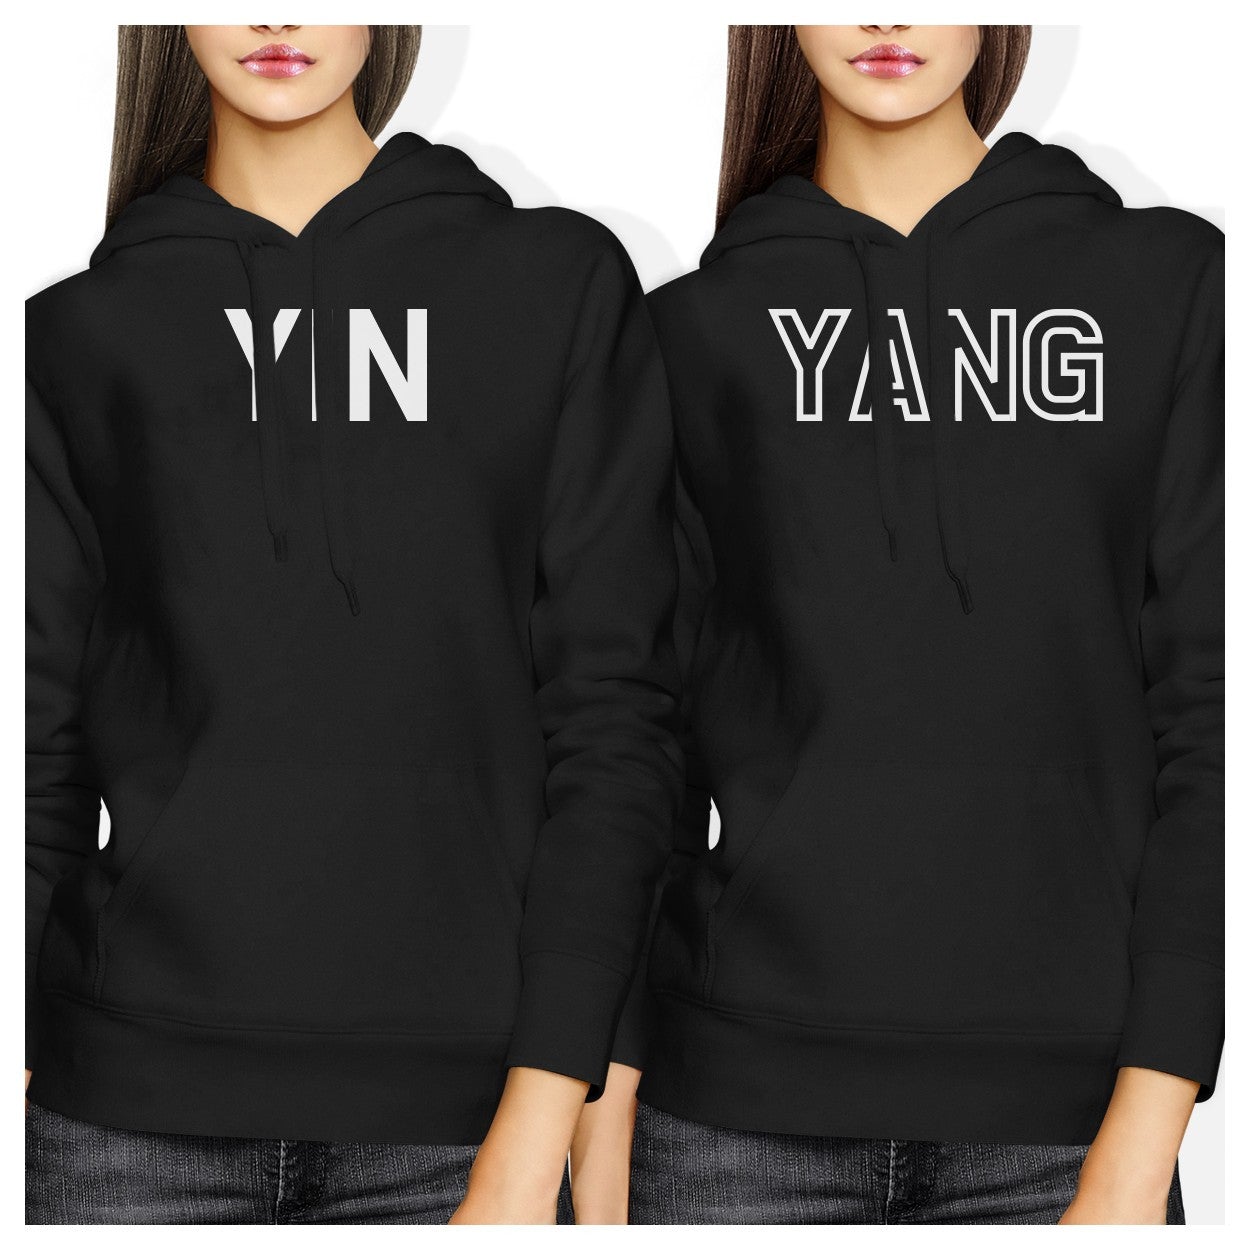 Ying And Yang BFF Hoodies Friendship Matching Hooded Sweatshirts Black